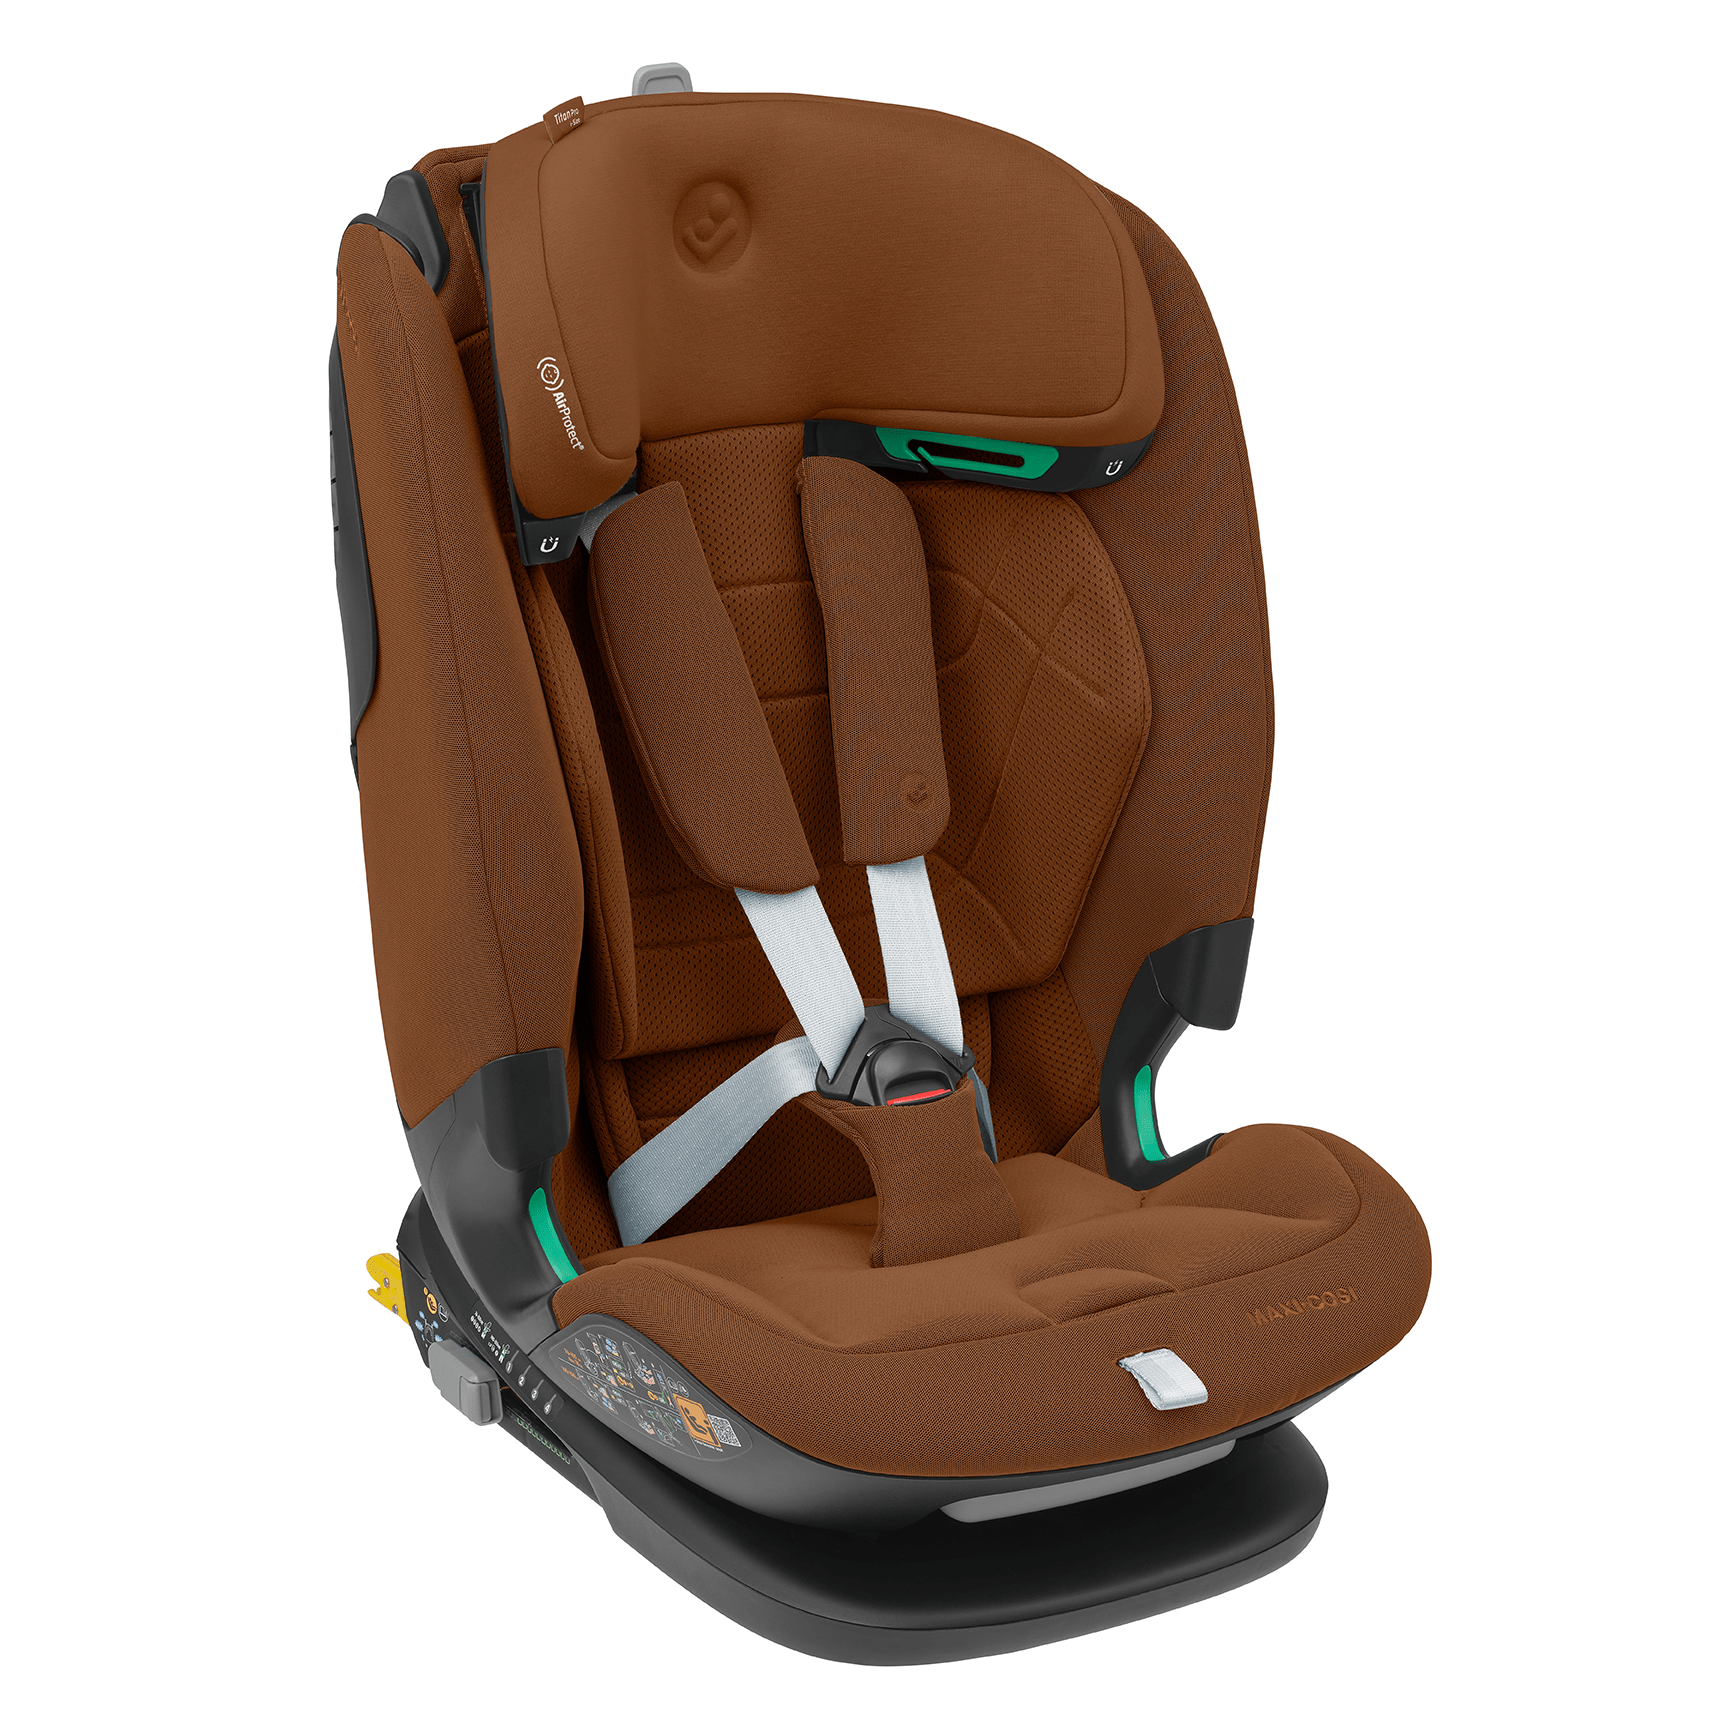 Maxi-Cosi baby car seats Maxi-Cosi Titan Pro 2 i-Size Car Seat in Authentic Cognac 8618650111